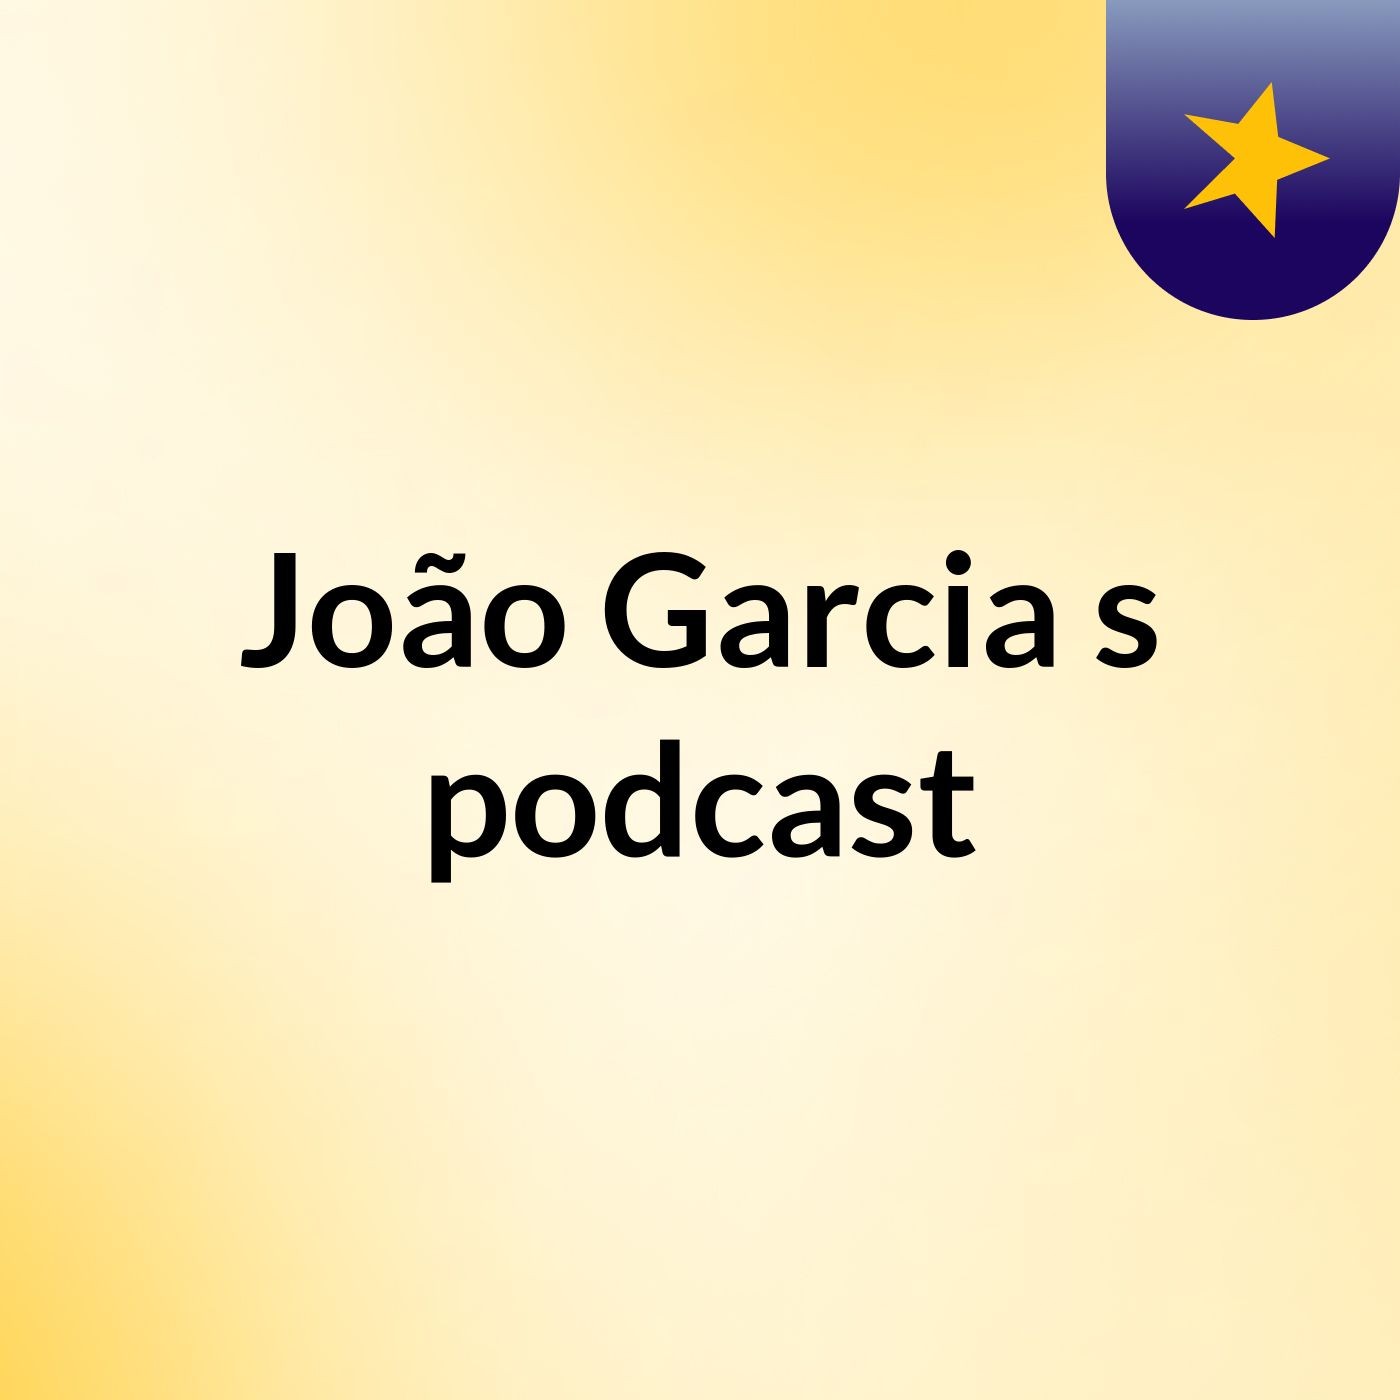 João Garcia's podcast